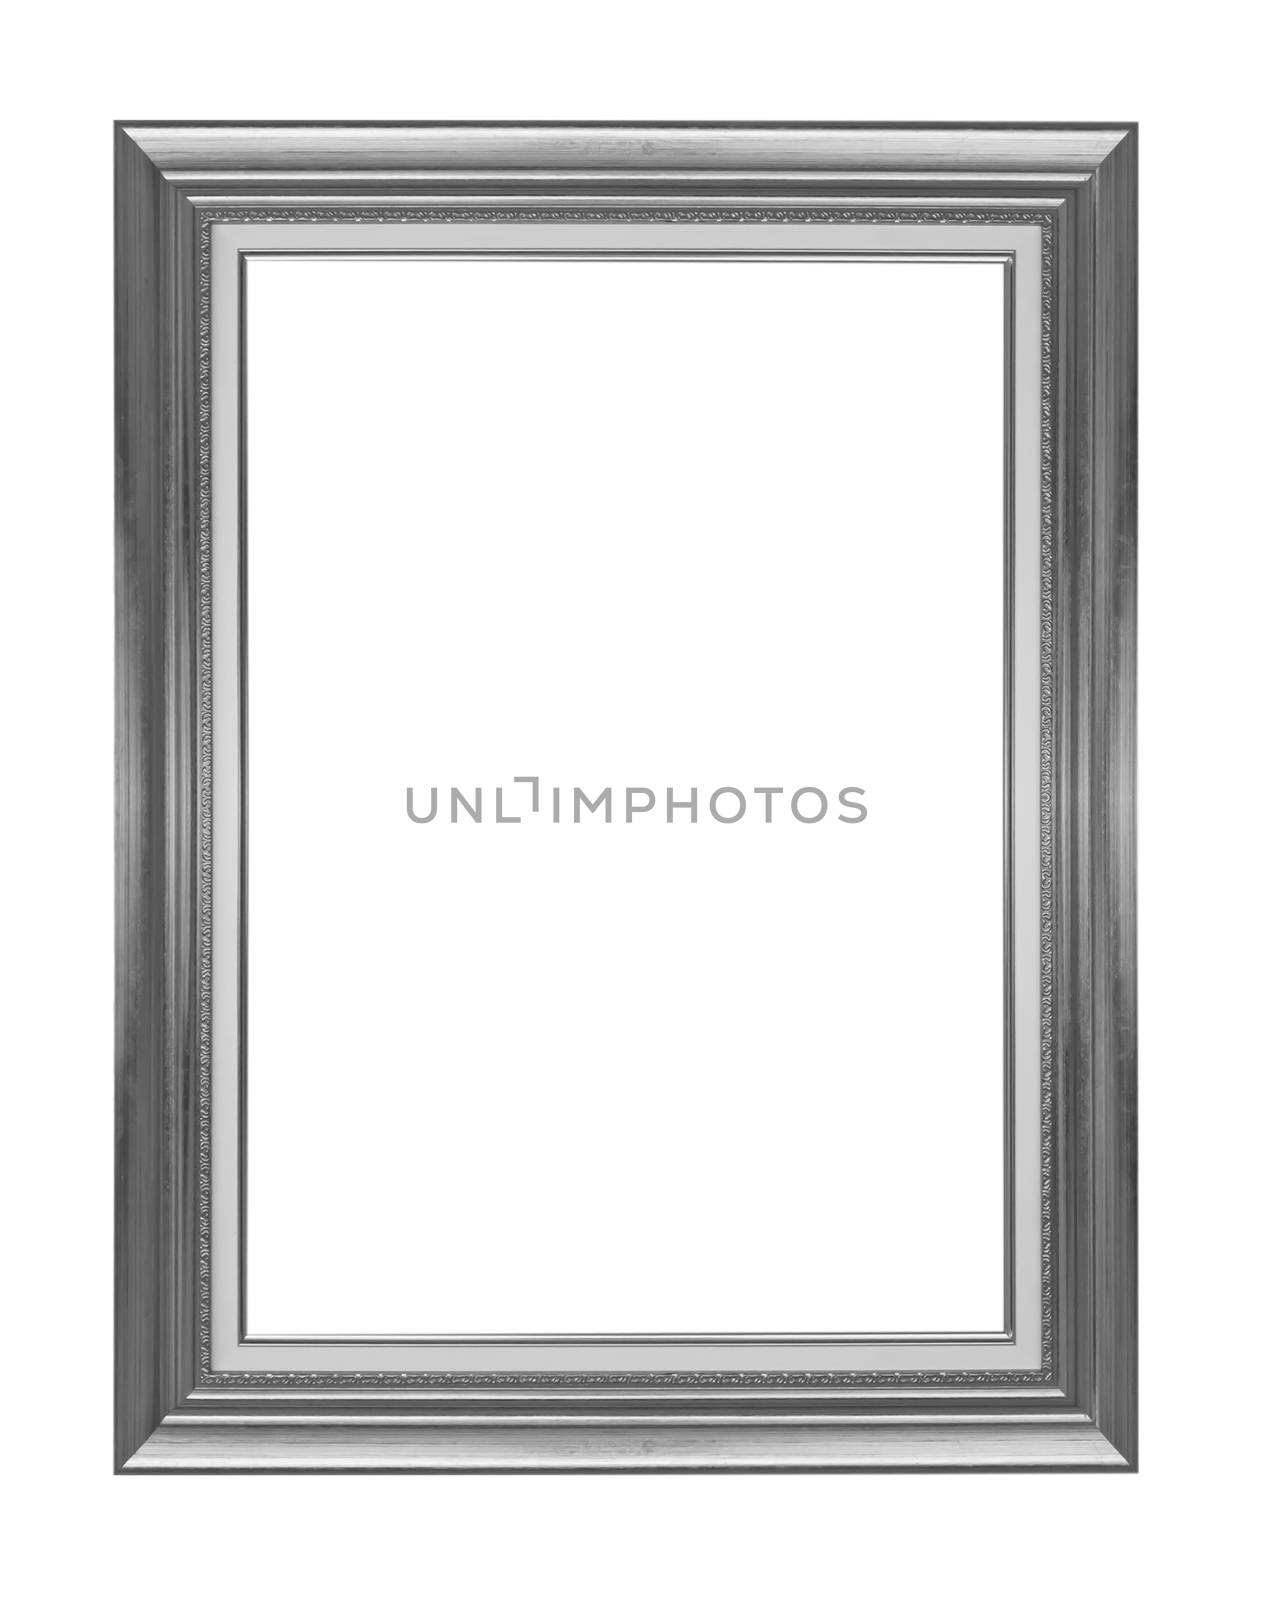 black antique frame isolated on white background.